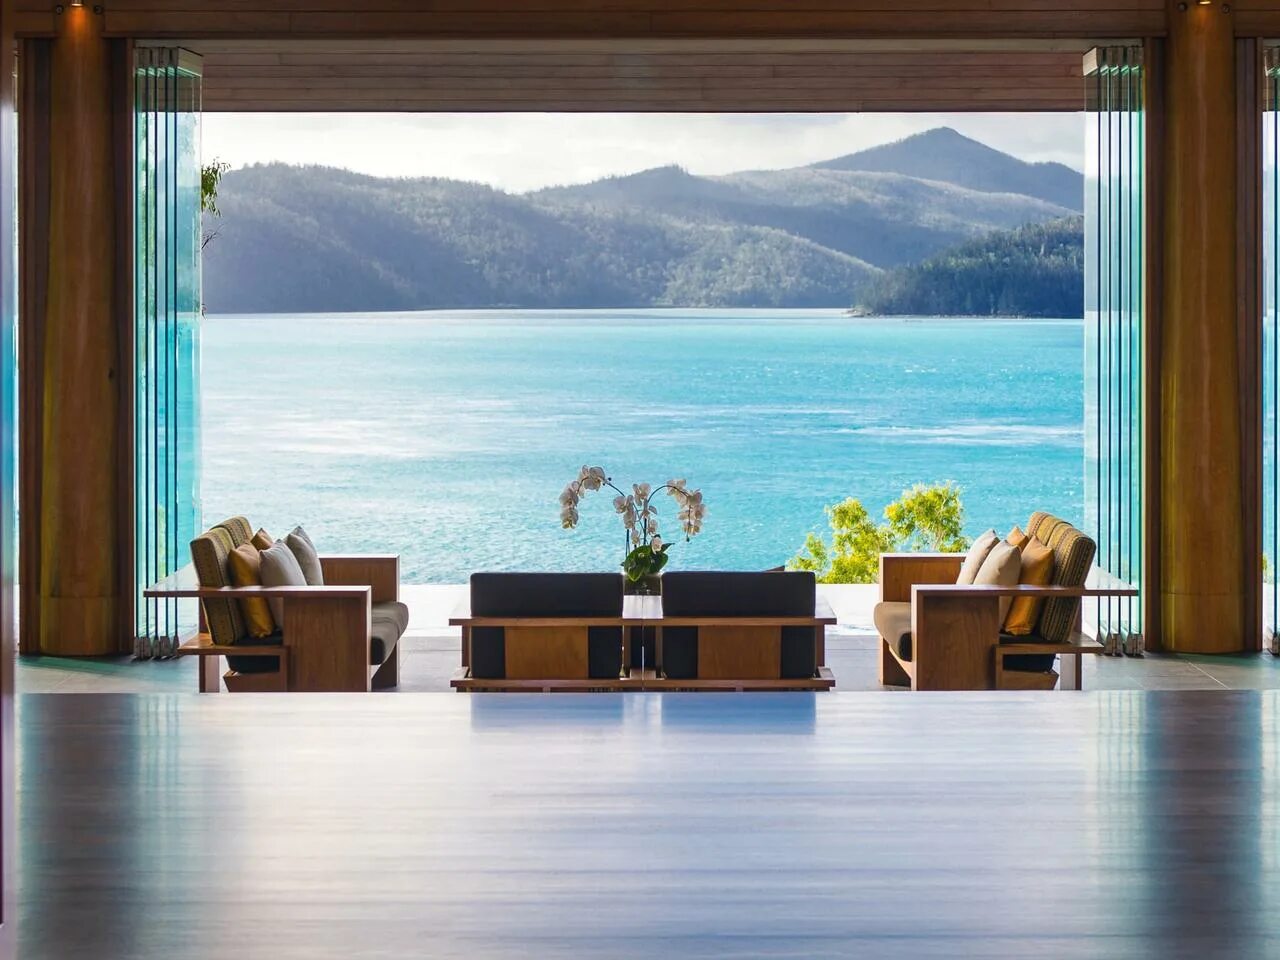 Курорты Австралии. Qualia Hotel. Luxury Villa Australia no 1 Romantic Getaway. Qualia-class.